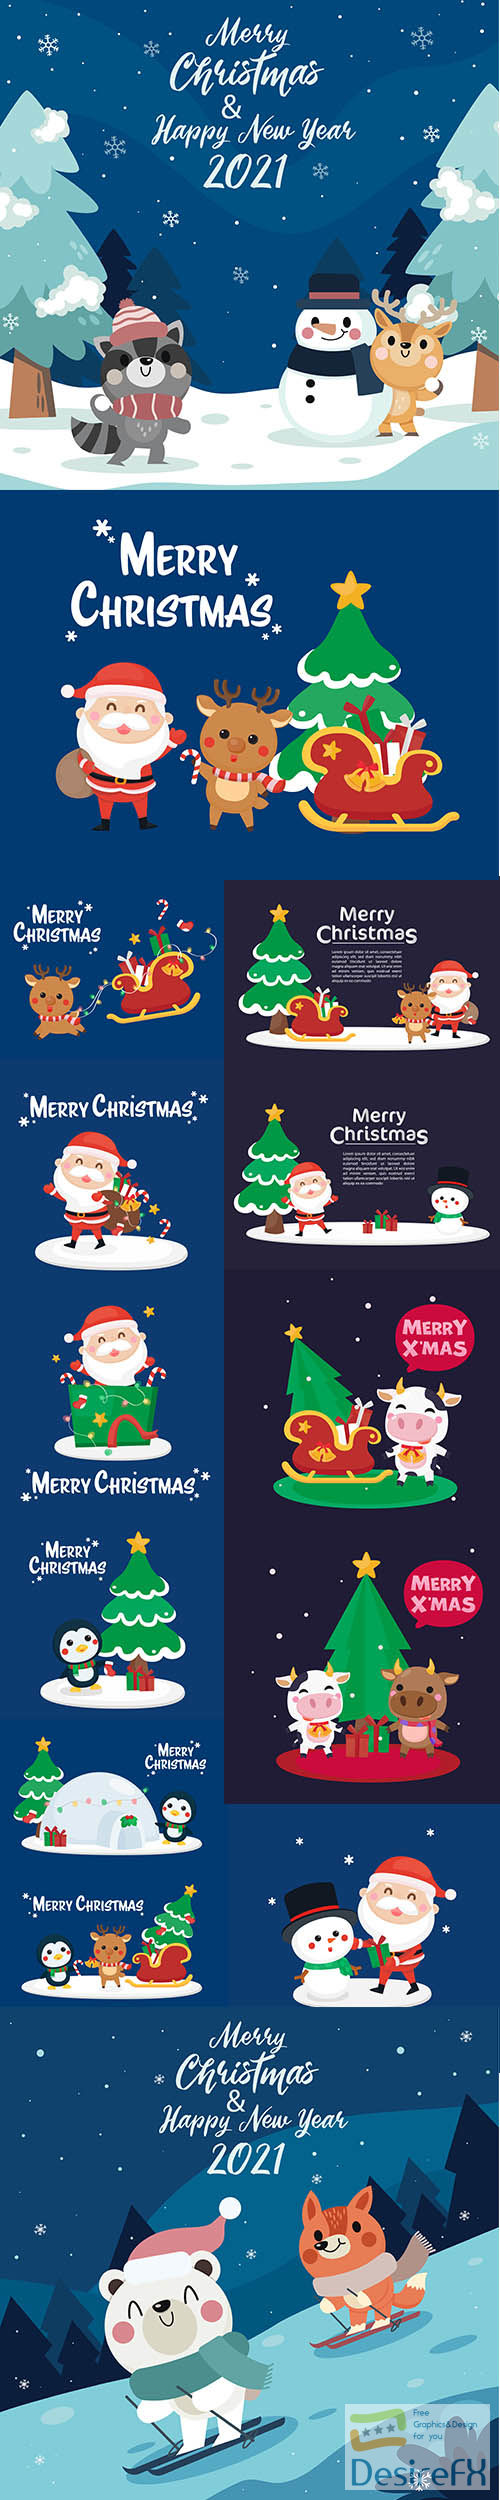 Christmas festive template greeting card